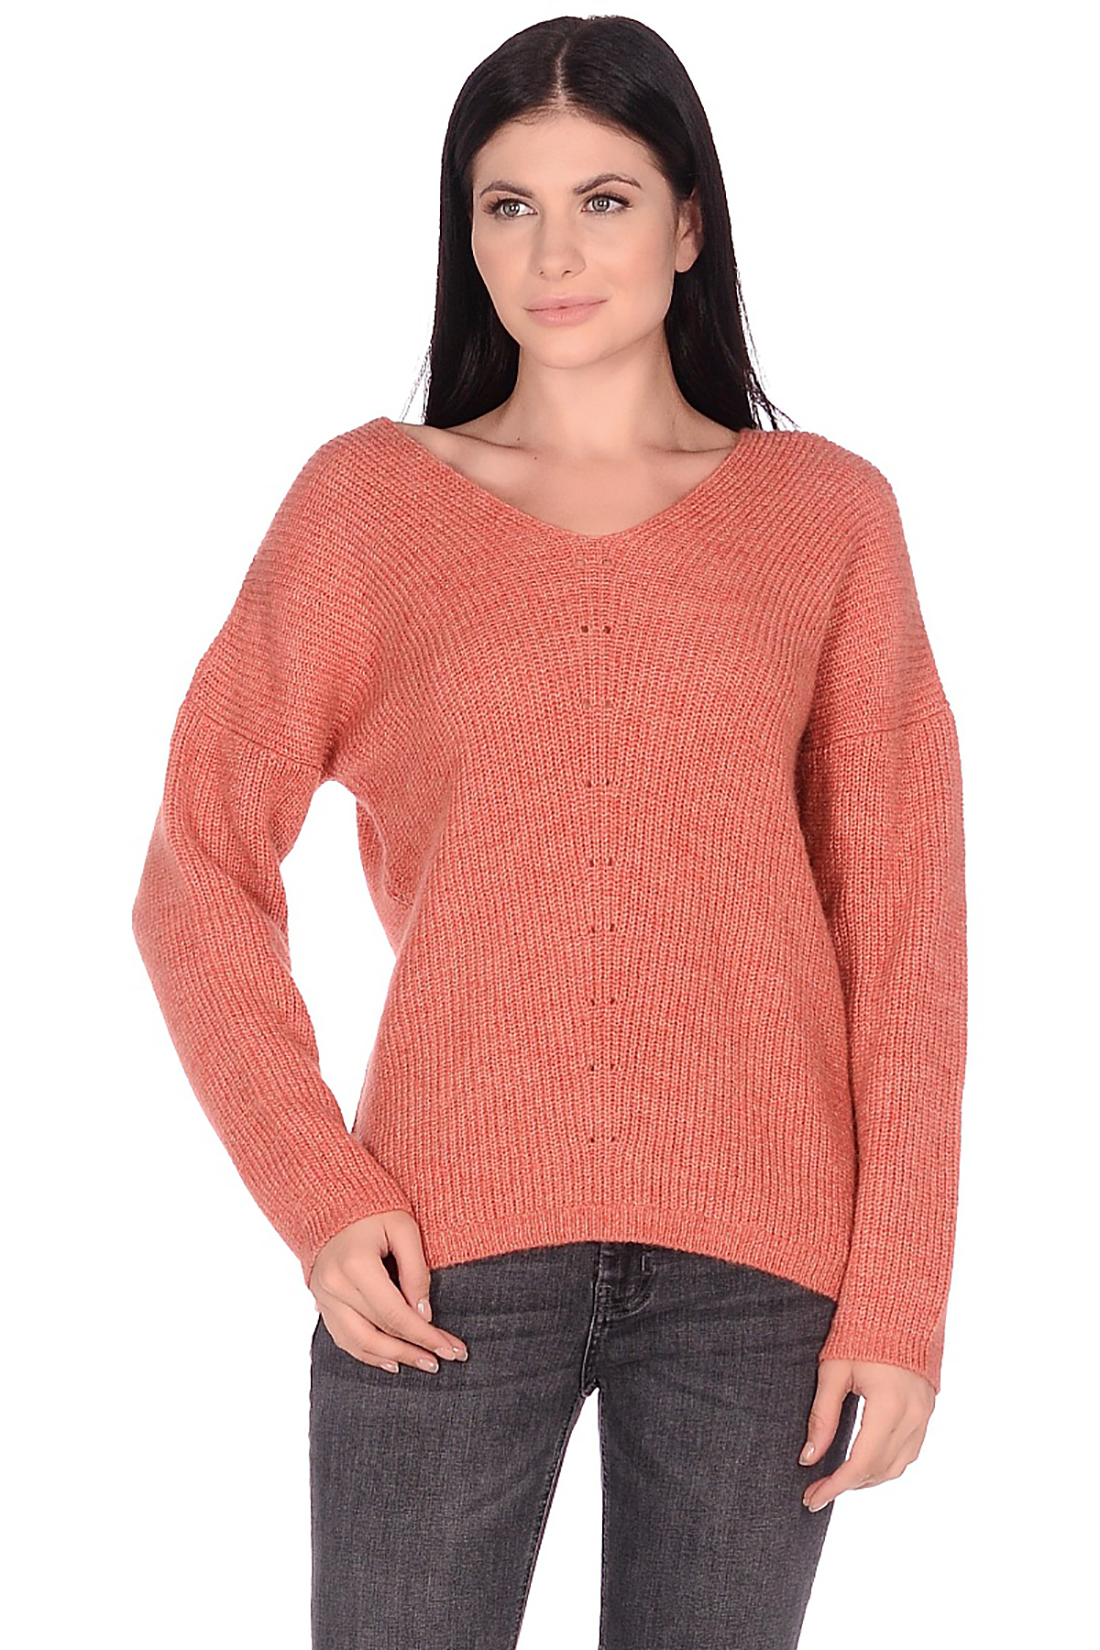 Пуловер с альпакой и мохером (арт. baon B139529), размер L, цвет coral reef melange#розовый Пуловер с альпакой и мохером (арт. baon B139529) - фото 4